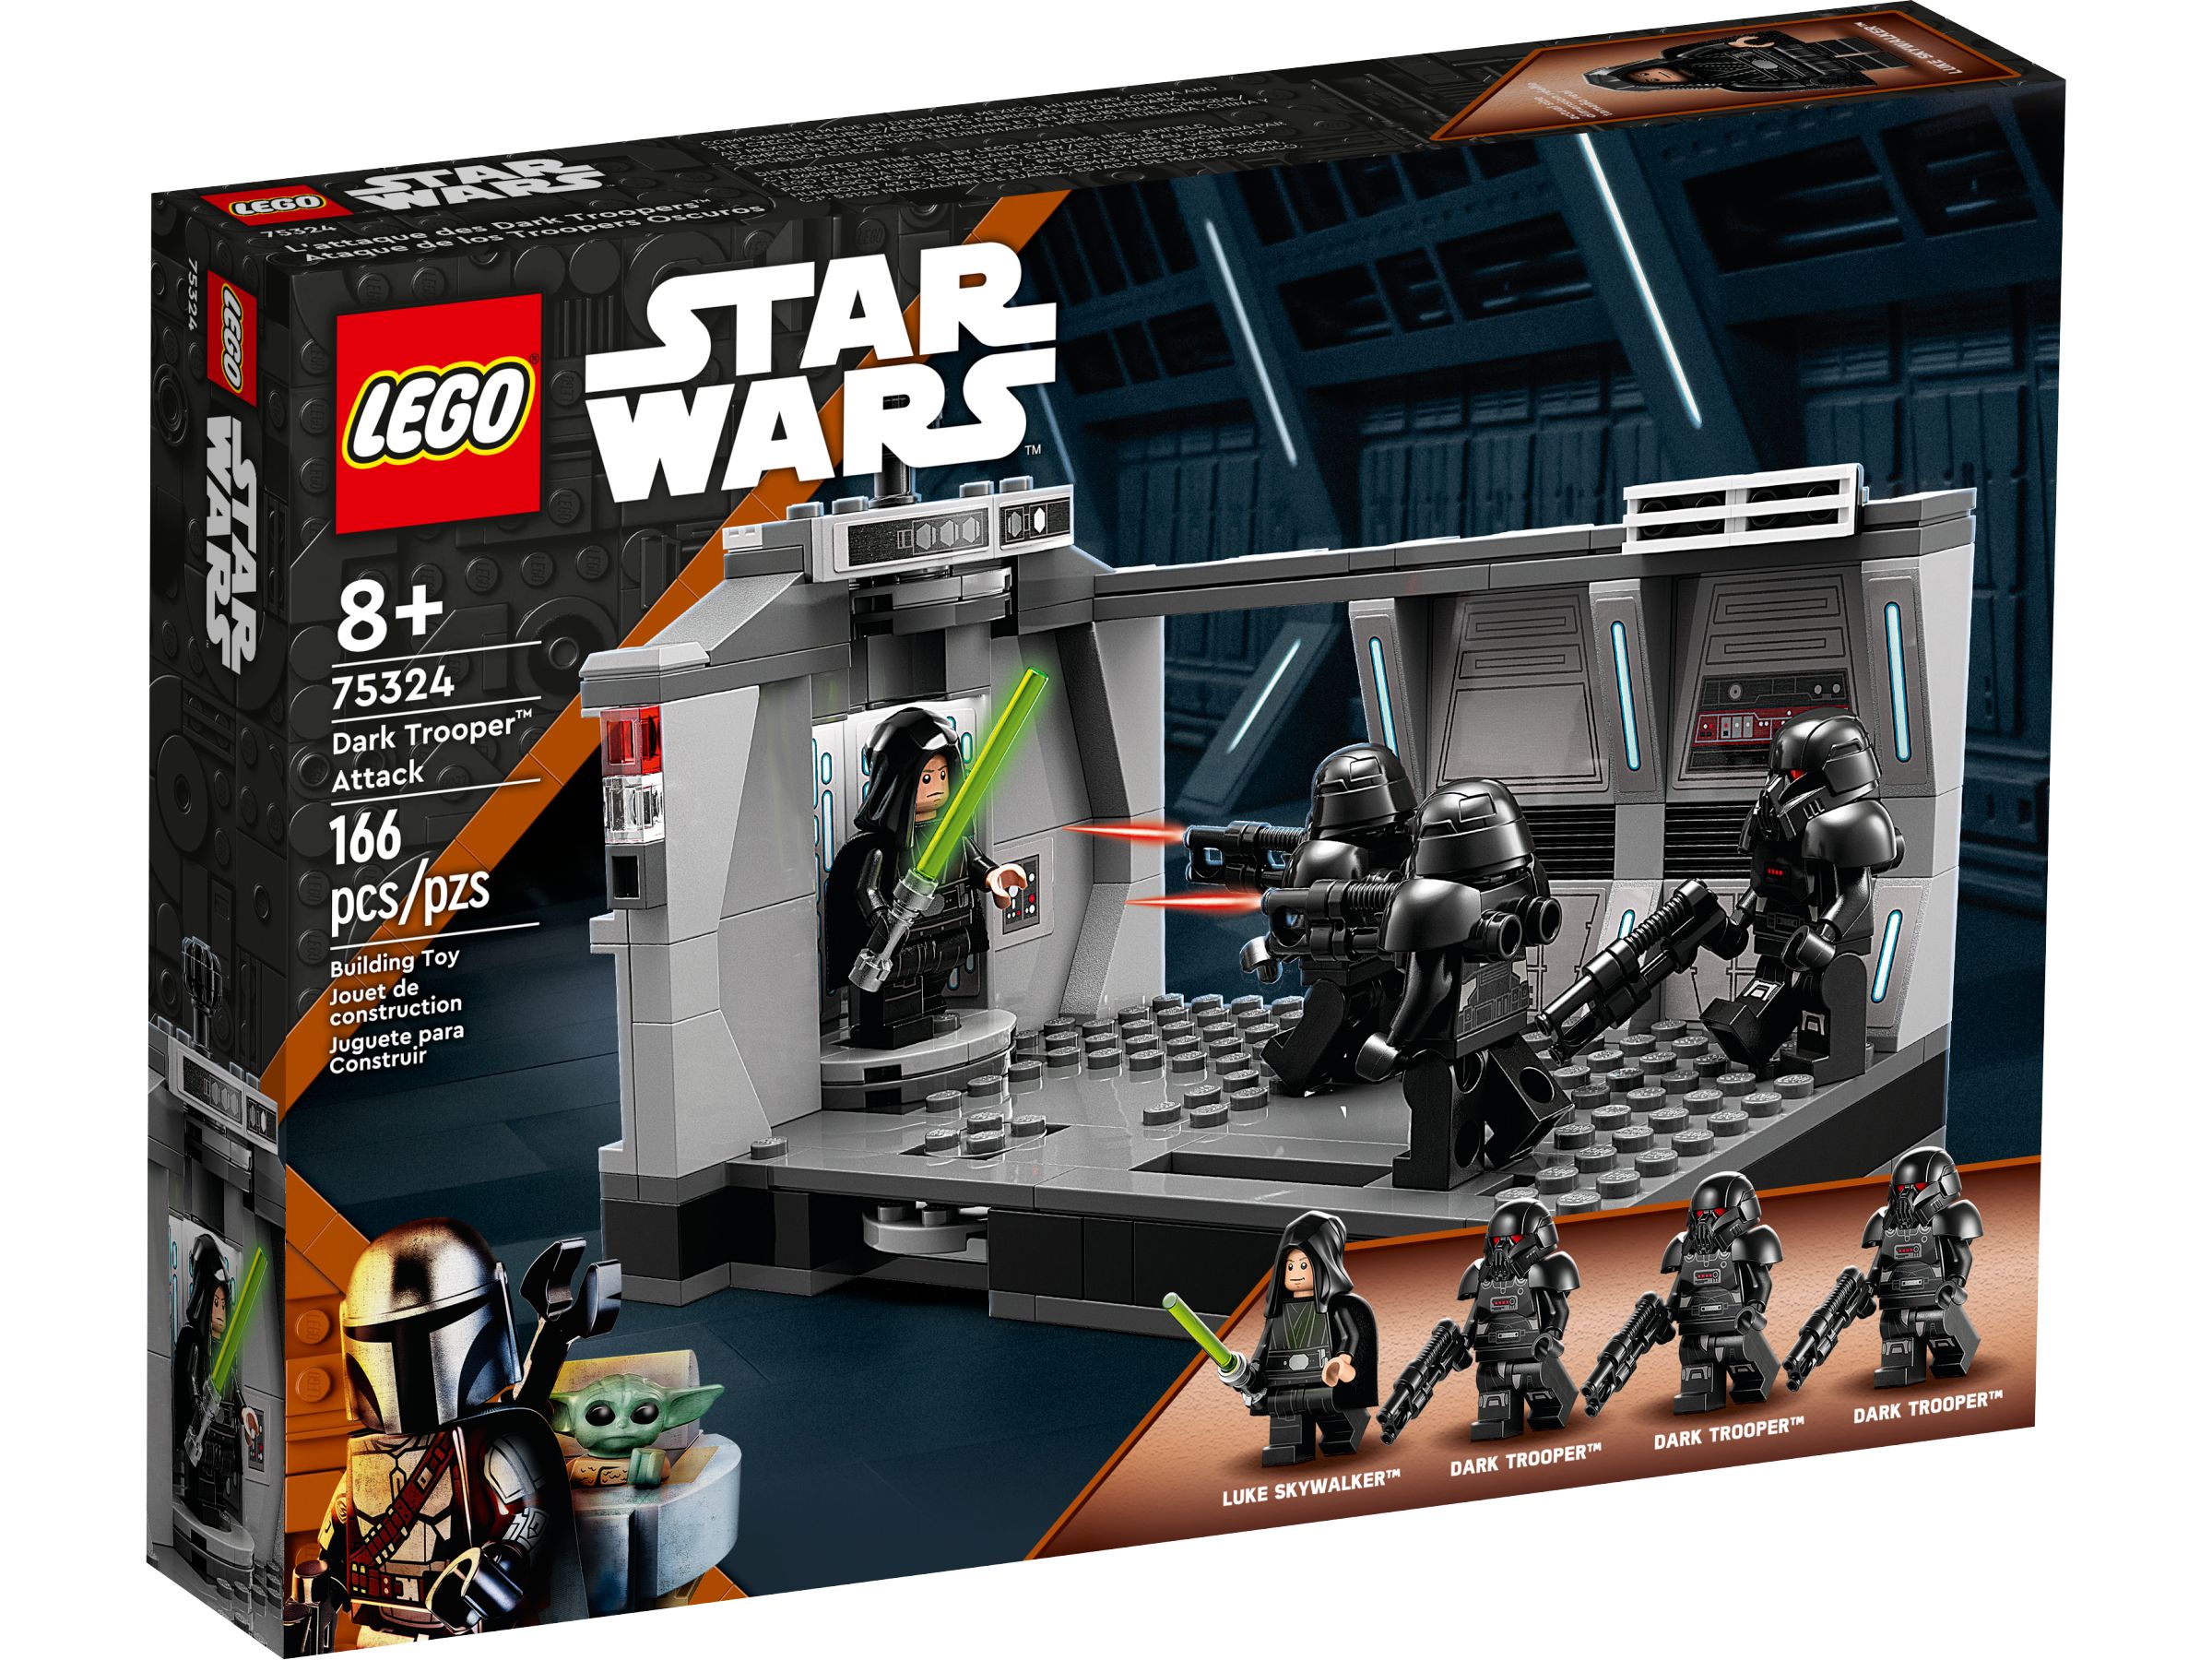 LEGO Star Wars 75324 Angriff der Dark Trooper™ LEGO_75324_alt1.jpg